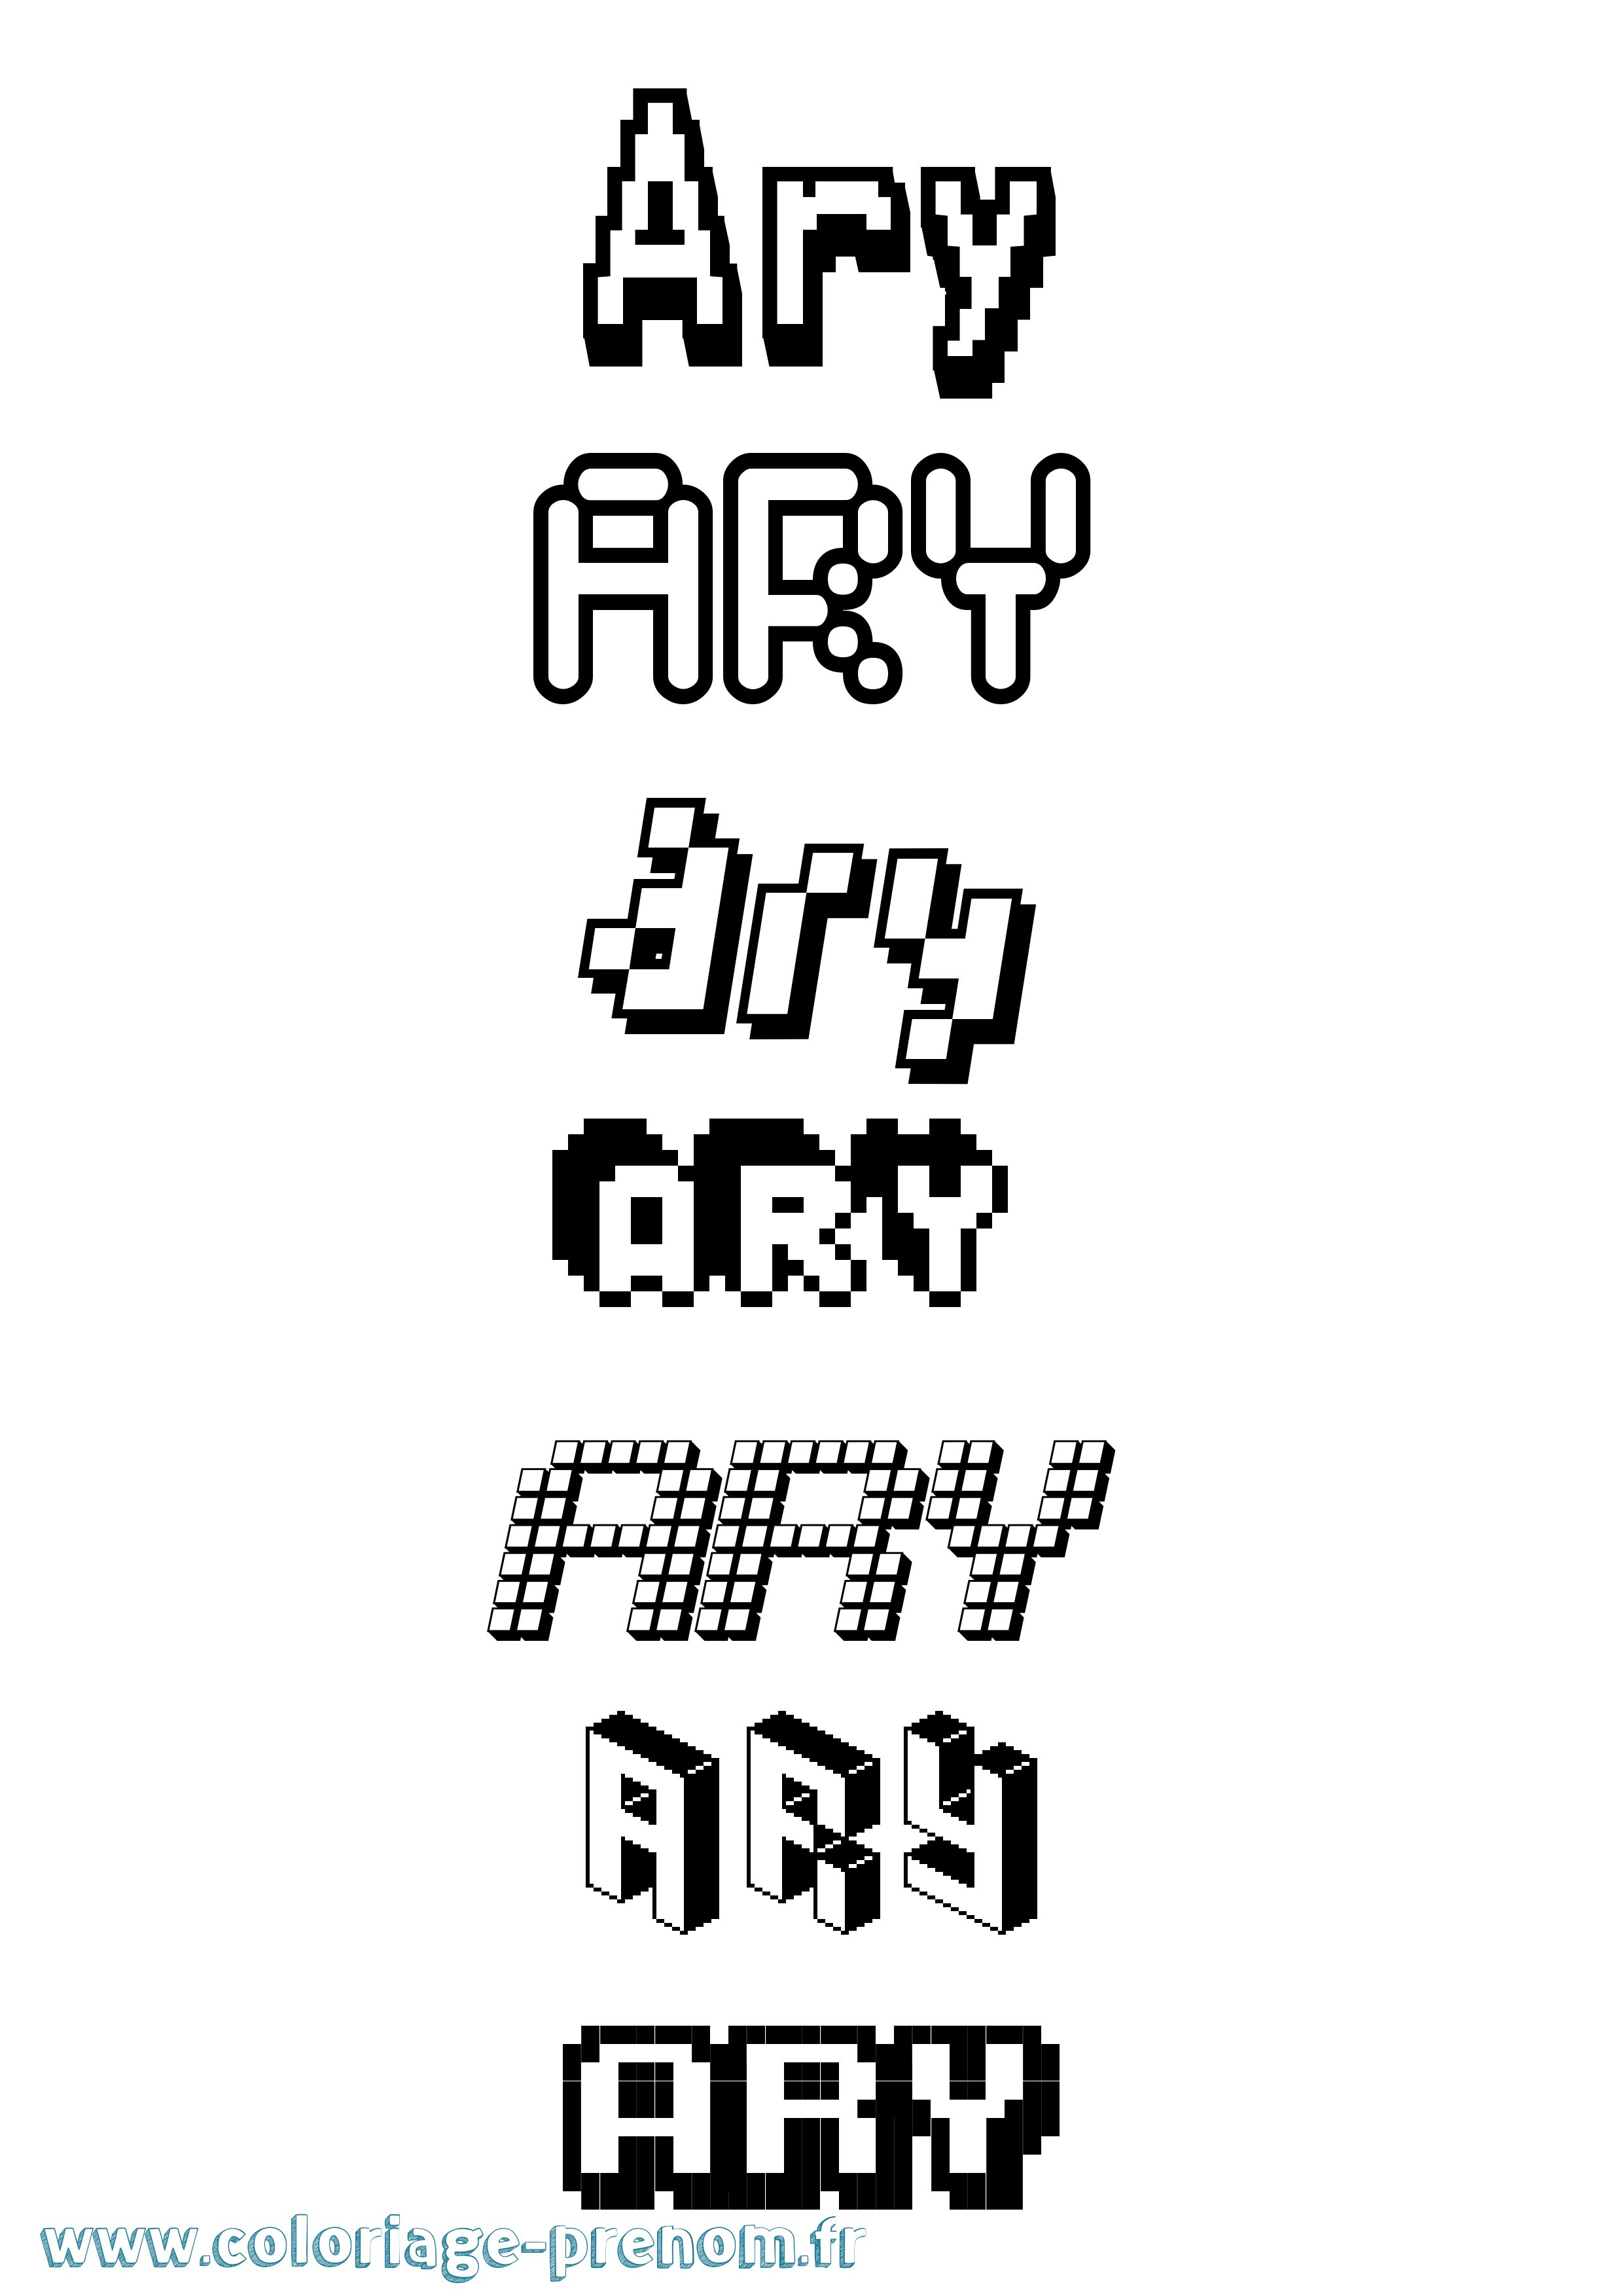 Coloriage prénom Ary Pixel